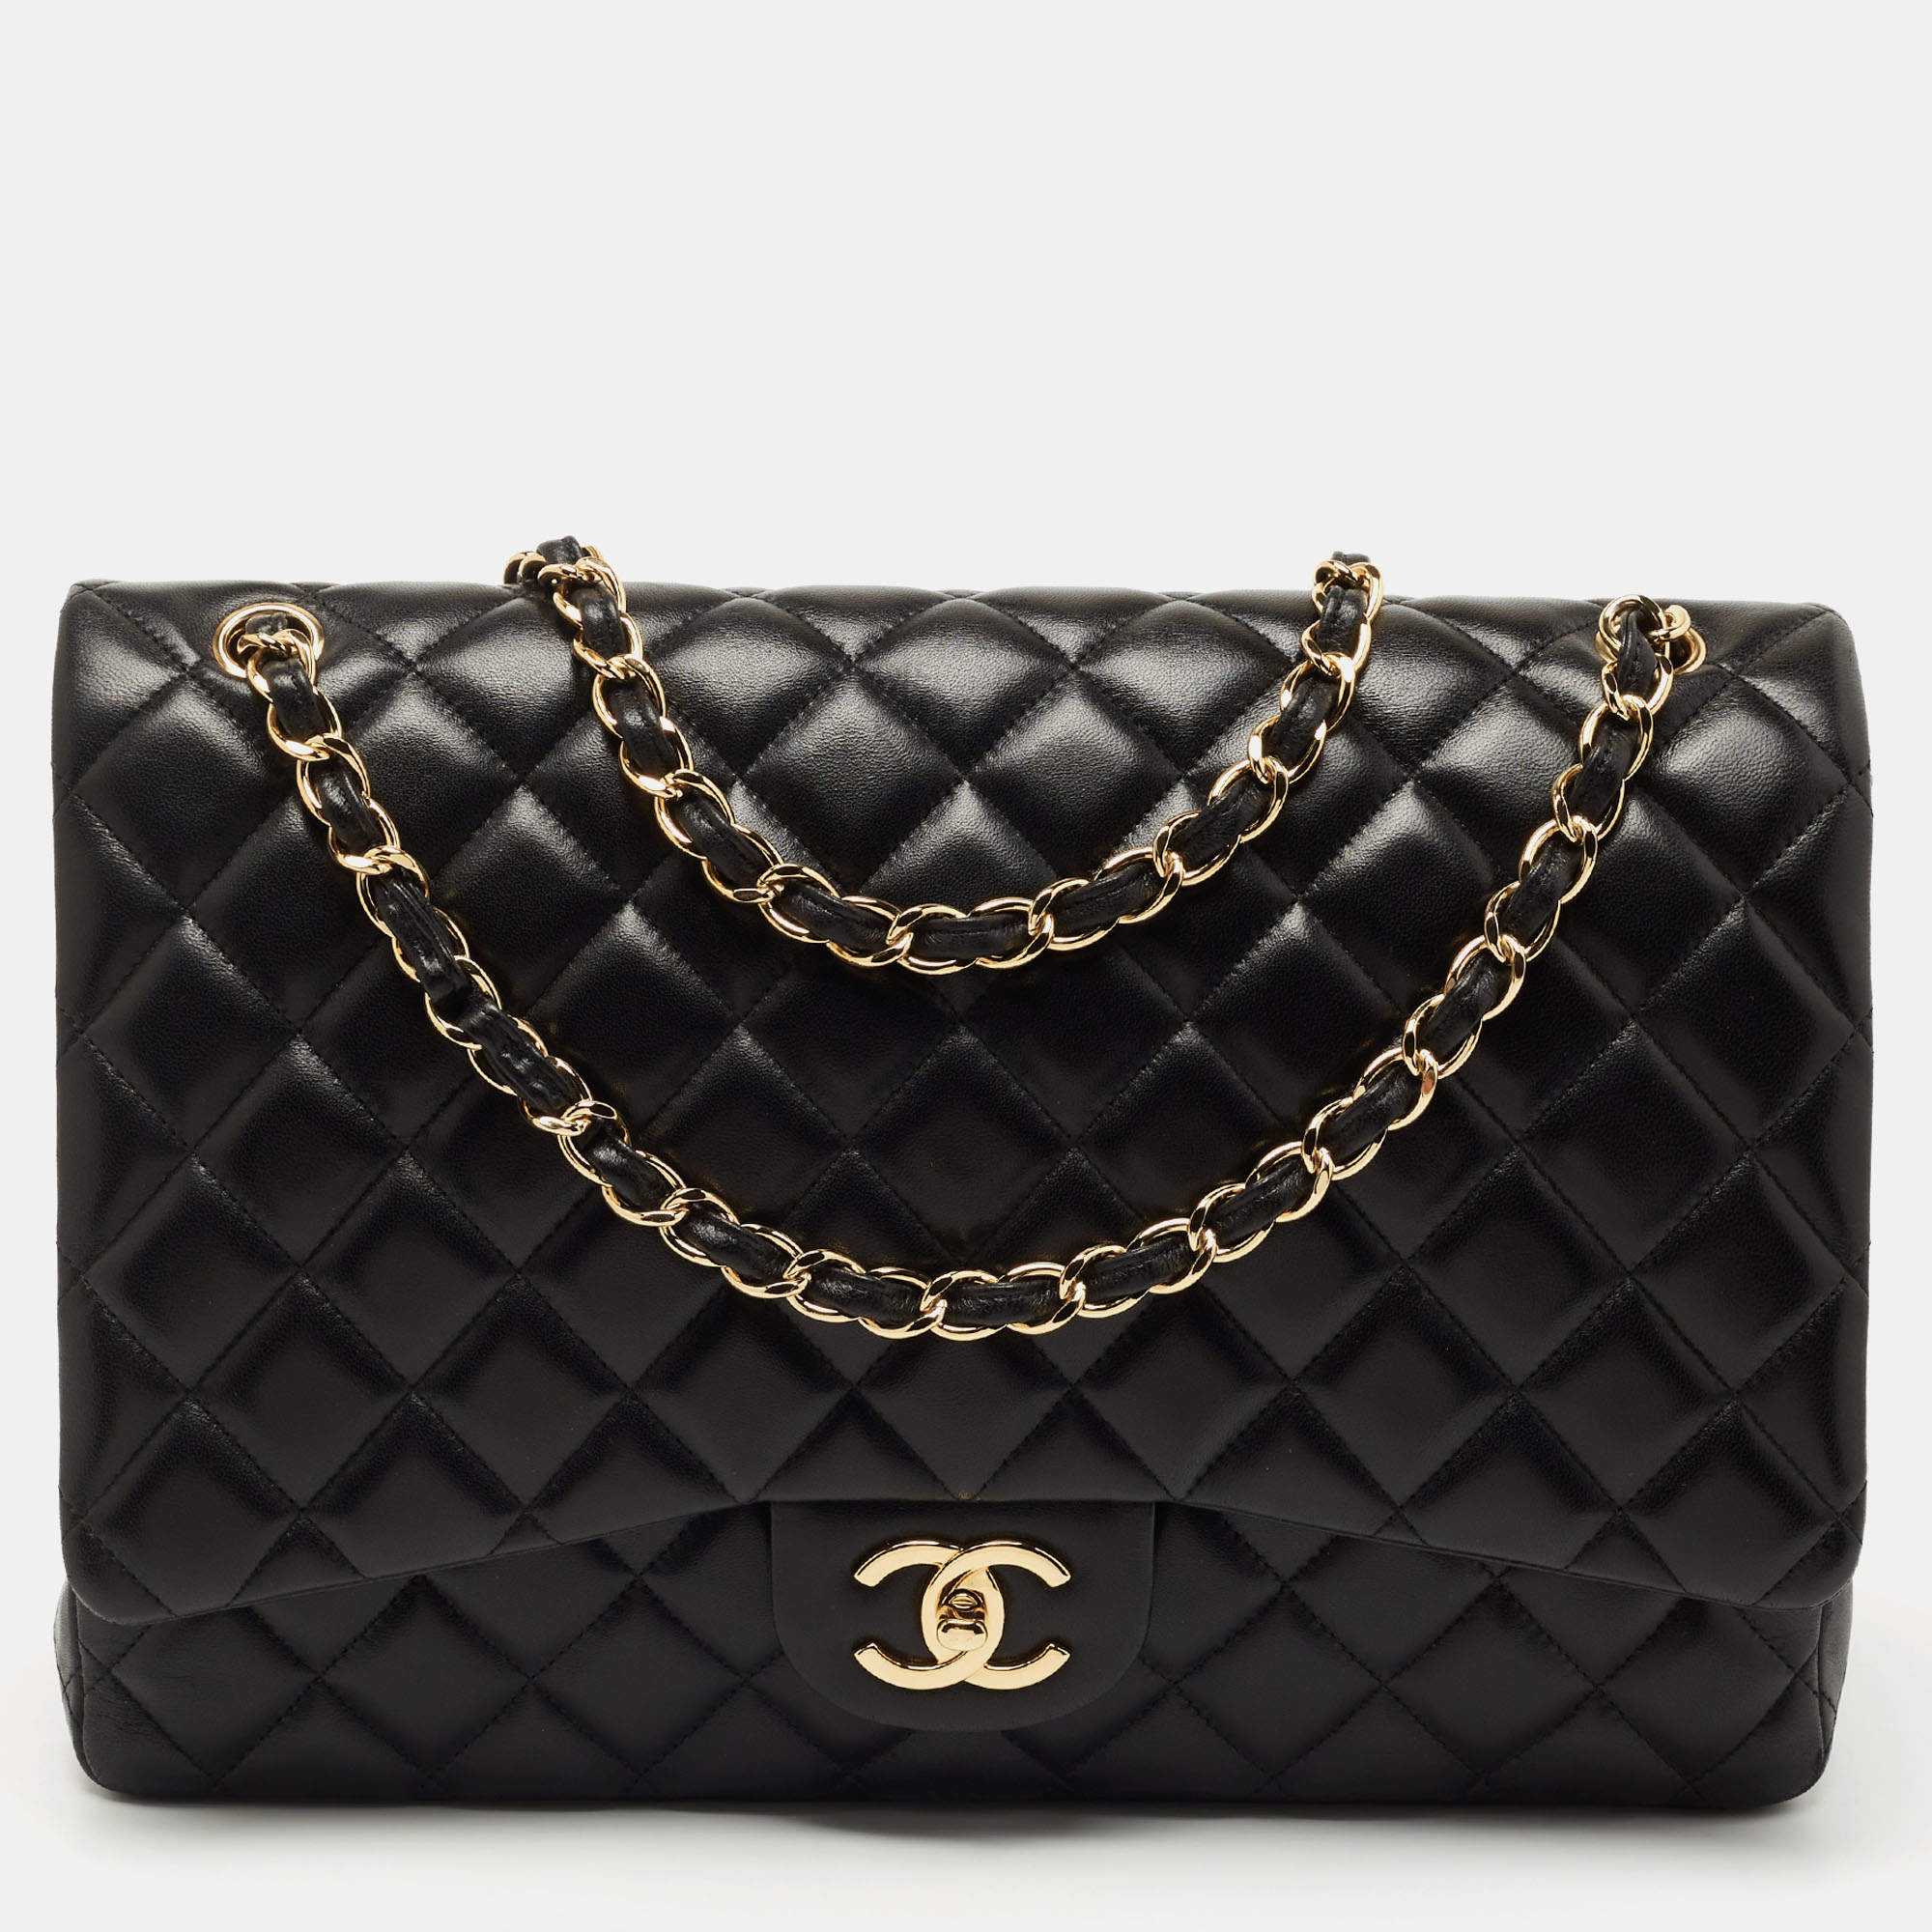 Chanel Black Leather Maxi Classic Double Flap Shoulder Bag